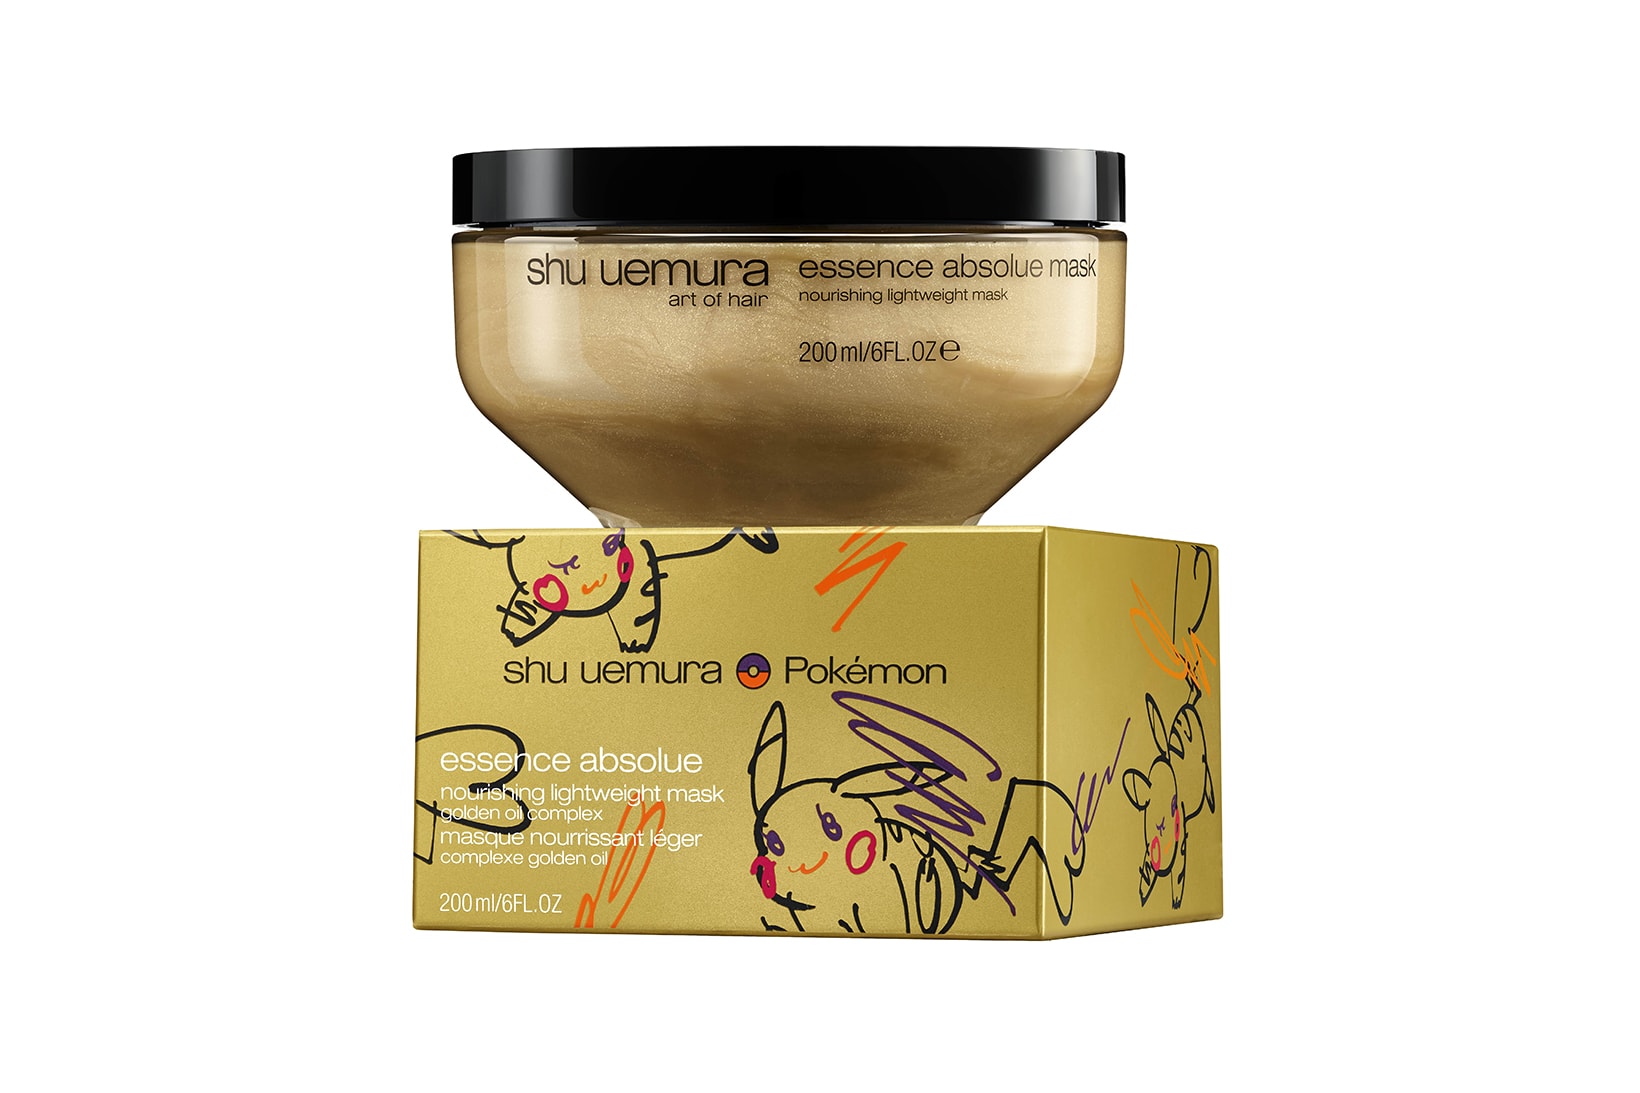 shu uemura pokemon pikachu pikashu haircare collaboration limited edition shampoo hair mask nourishing oil